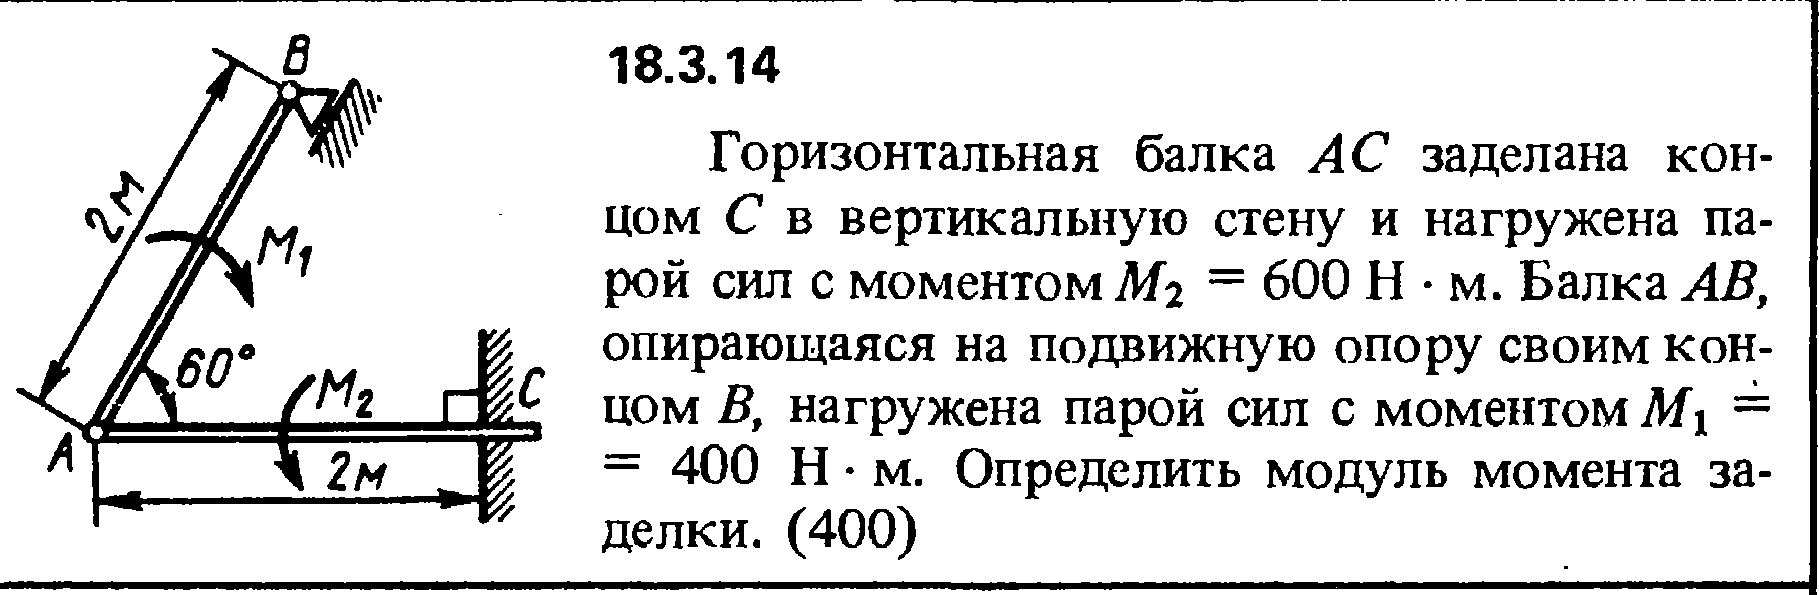 Решение 18.3.14 из сборника (решебника) Кепе О.Е. 1989